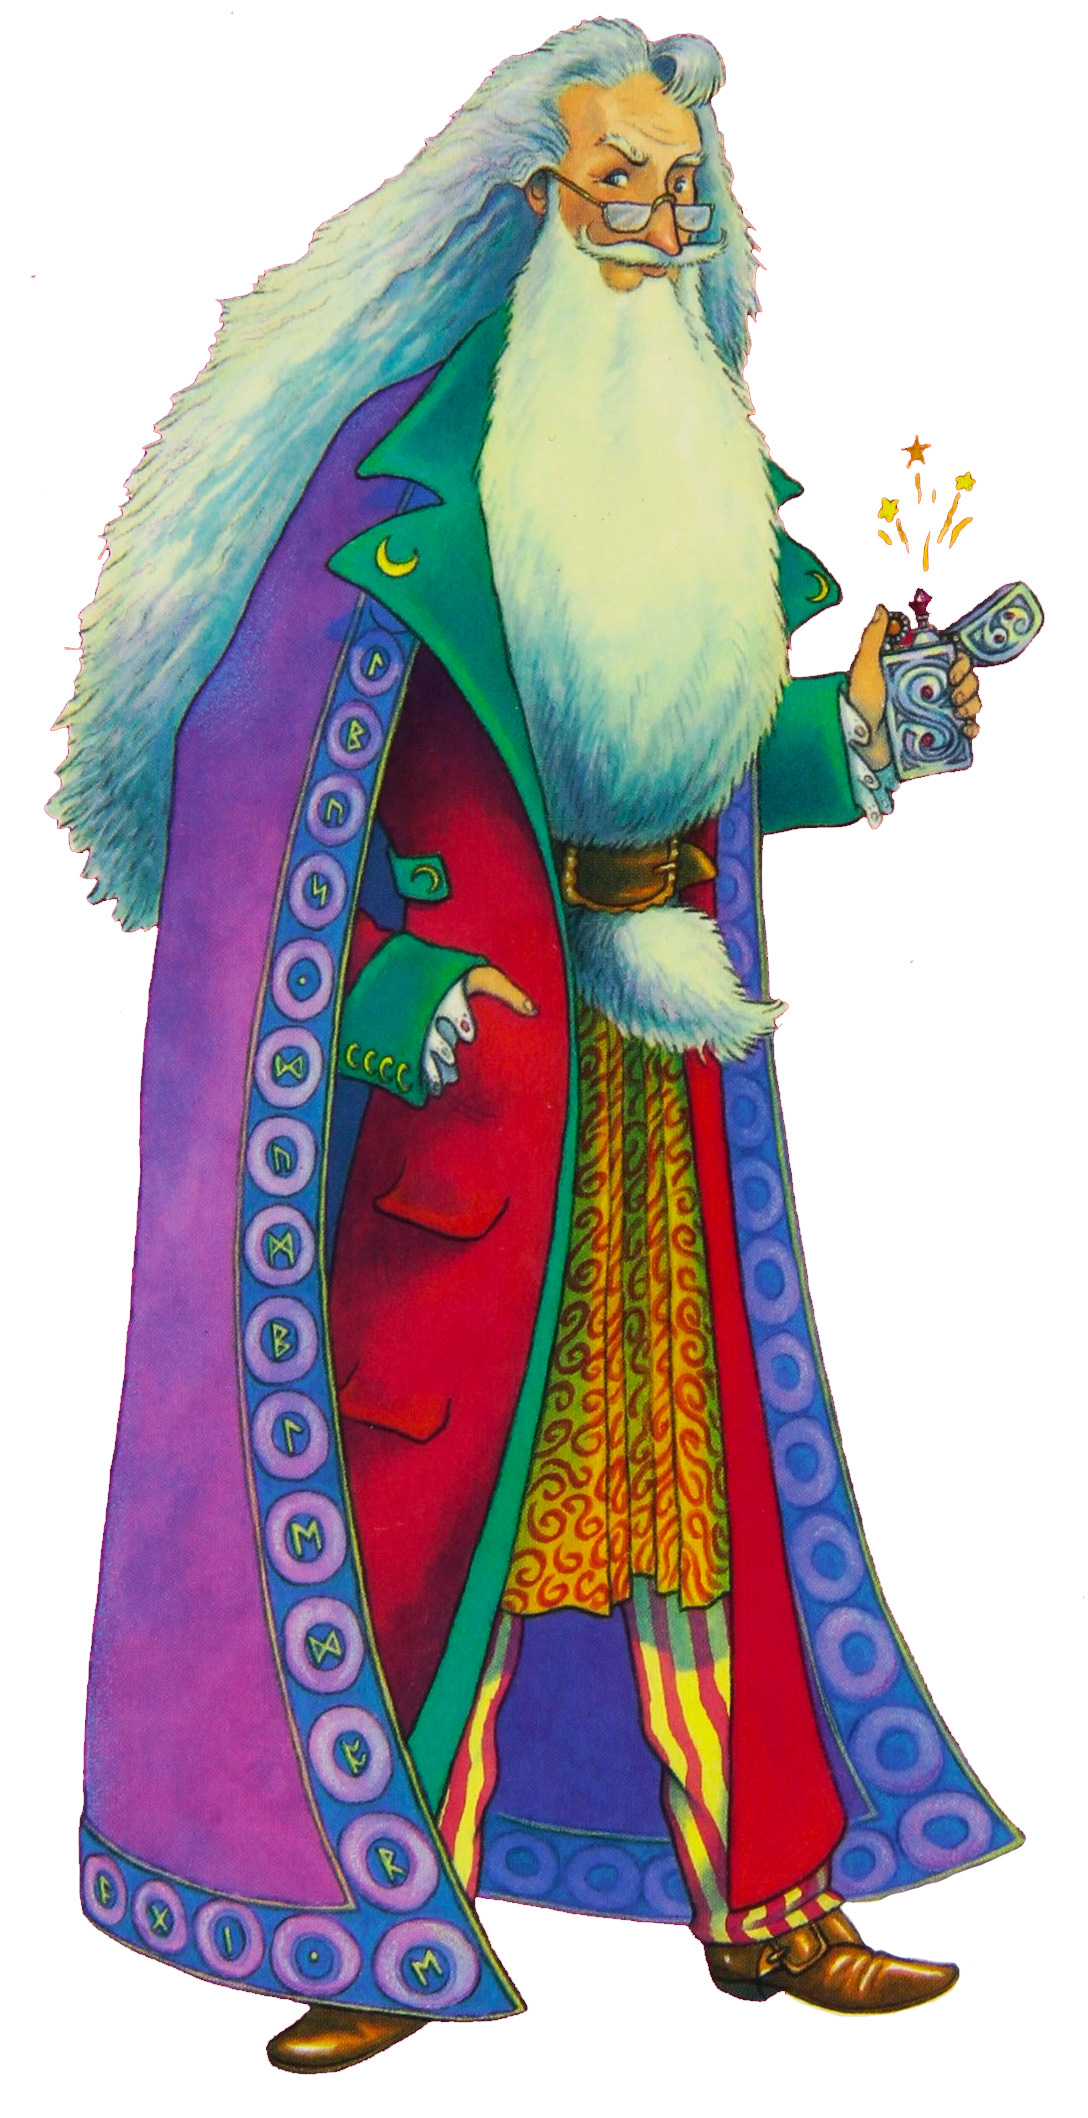 Albus Dumbledore (Thomas Taylor illustration)